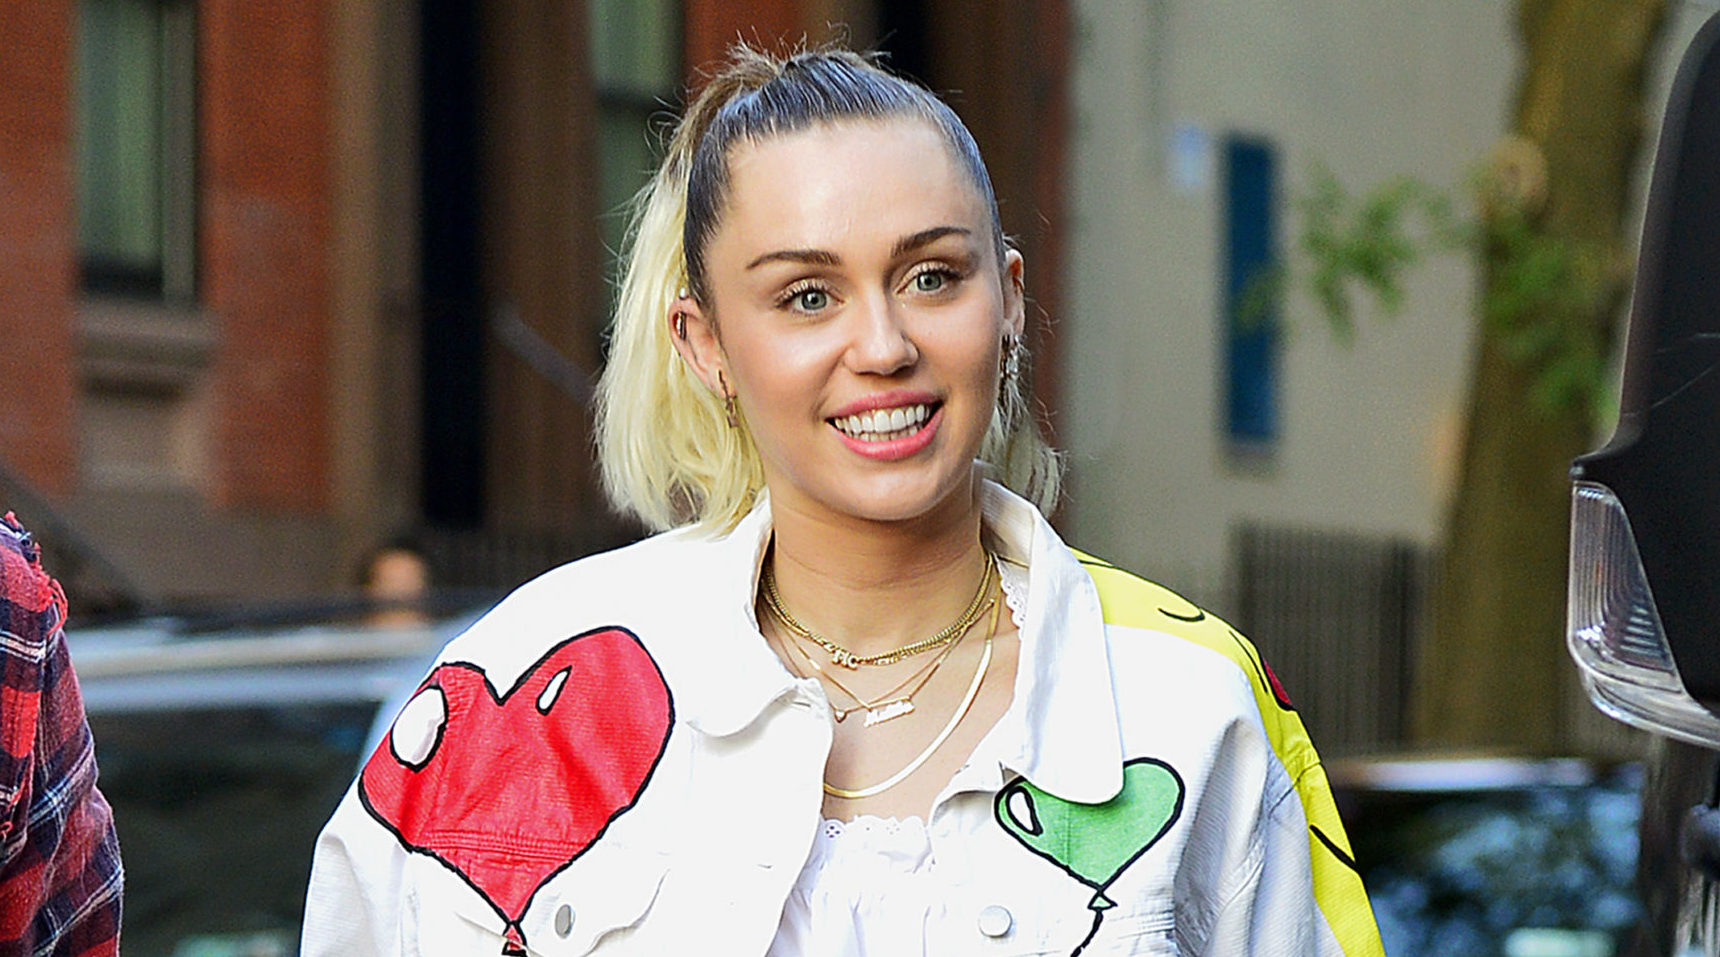 Miley Cyrus Says 'I've Gone Through a Lot of Trauma